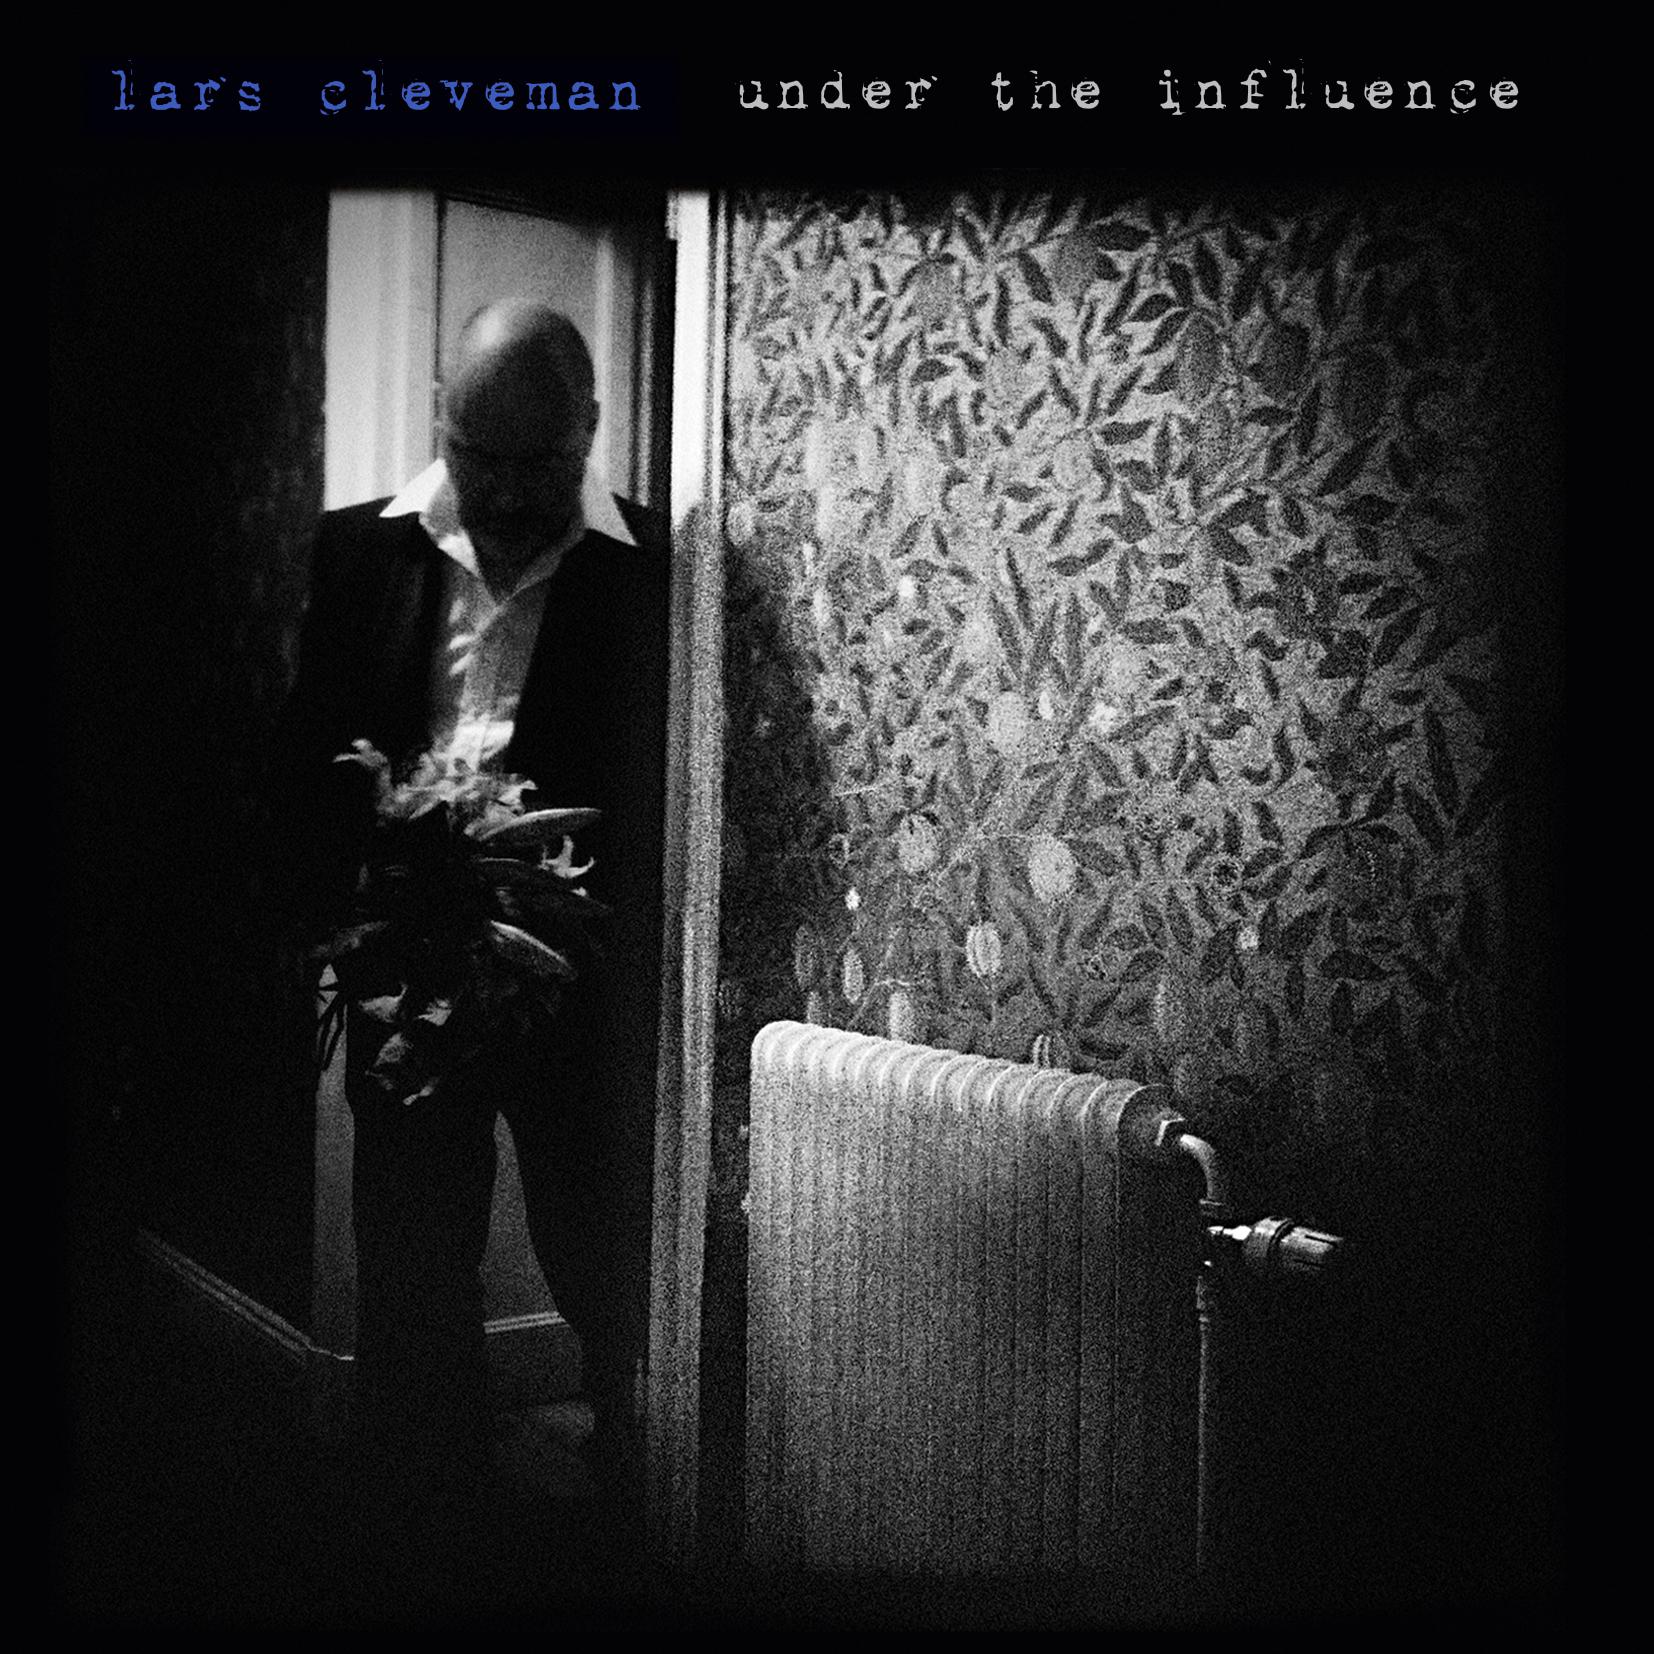 Lars Cleveman - The Devil's Work